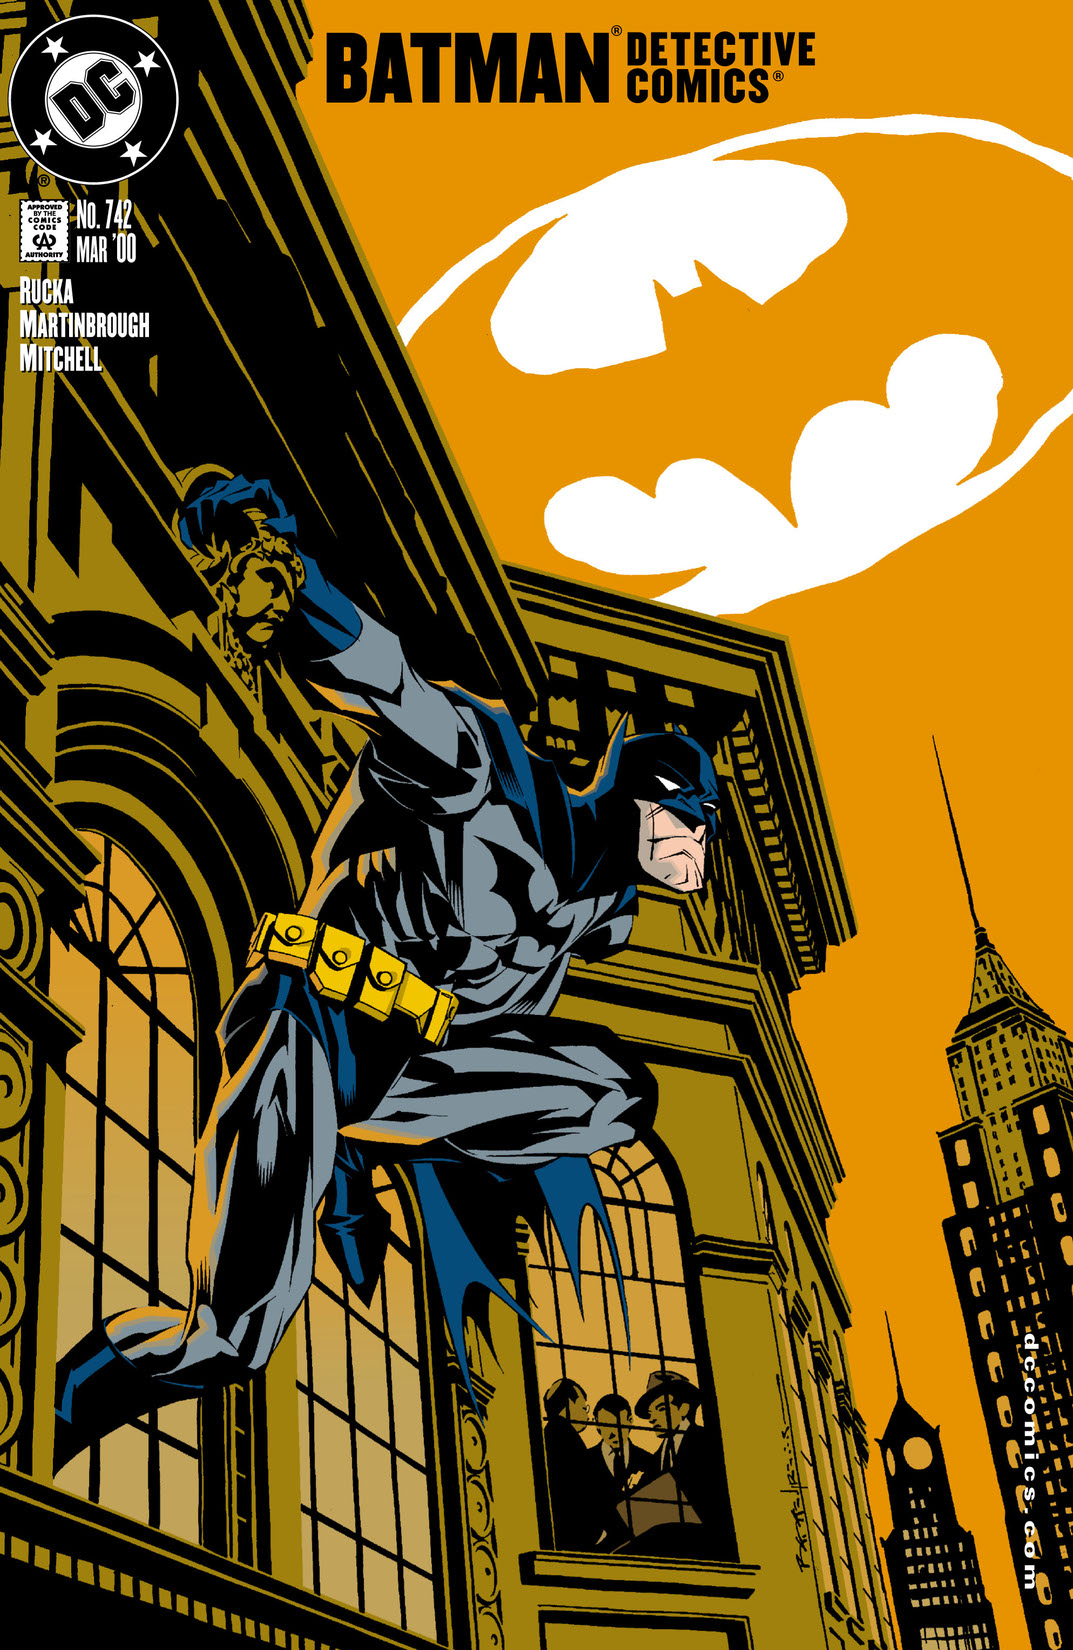 Detective Comics (1937-) #742 preview images